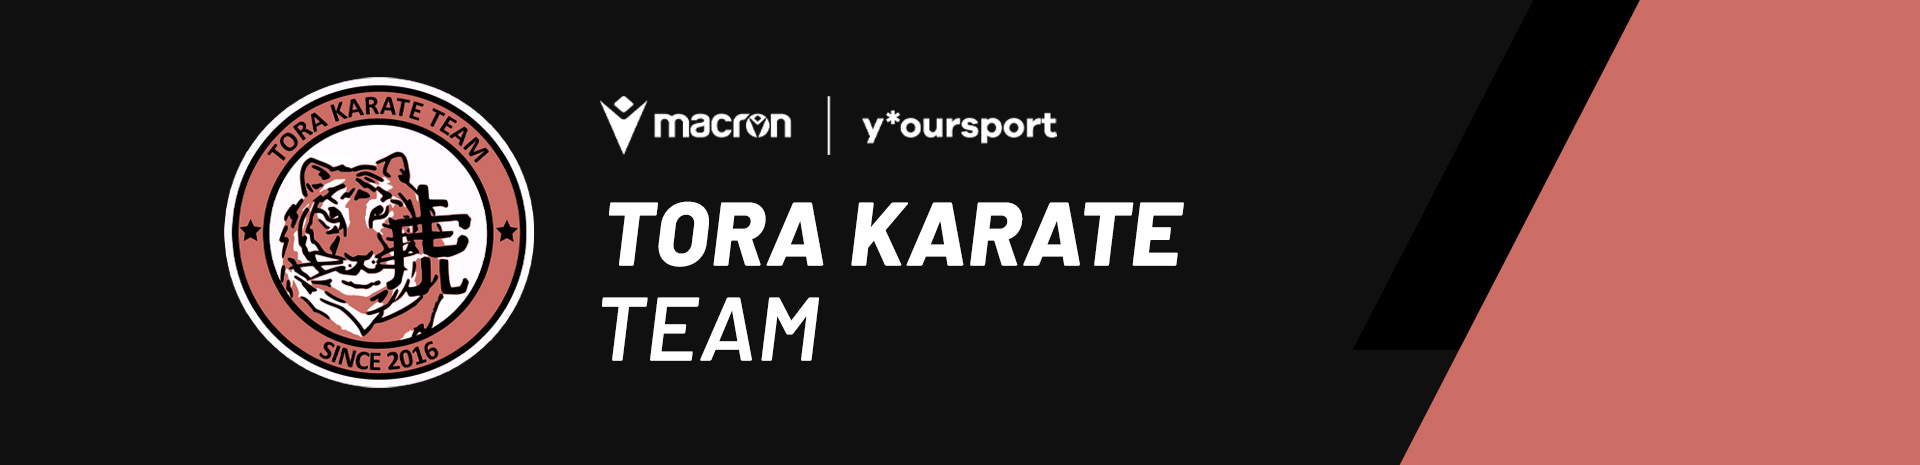 Tora Karate Team desktop